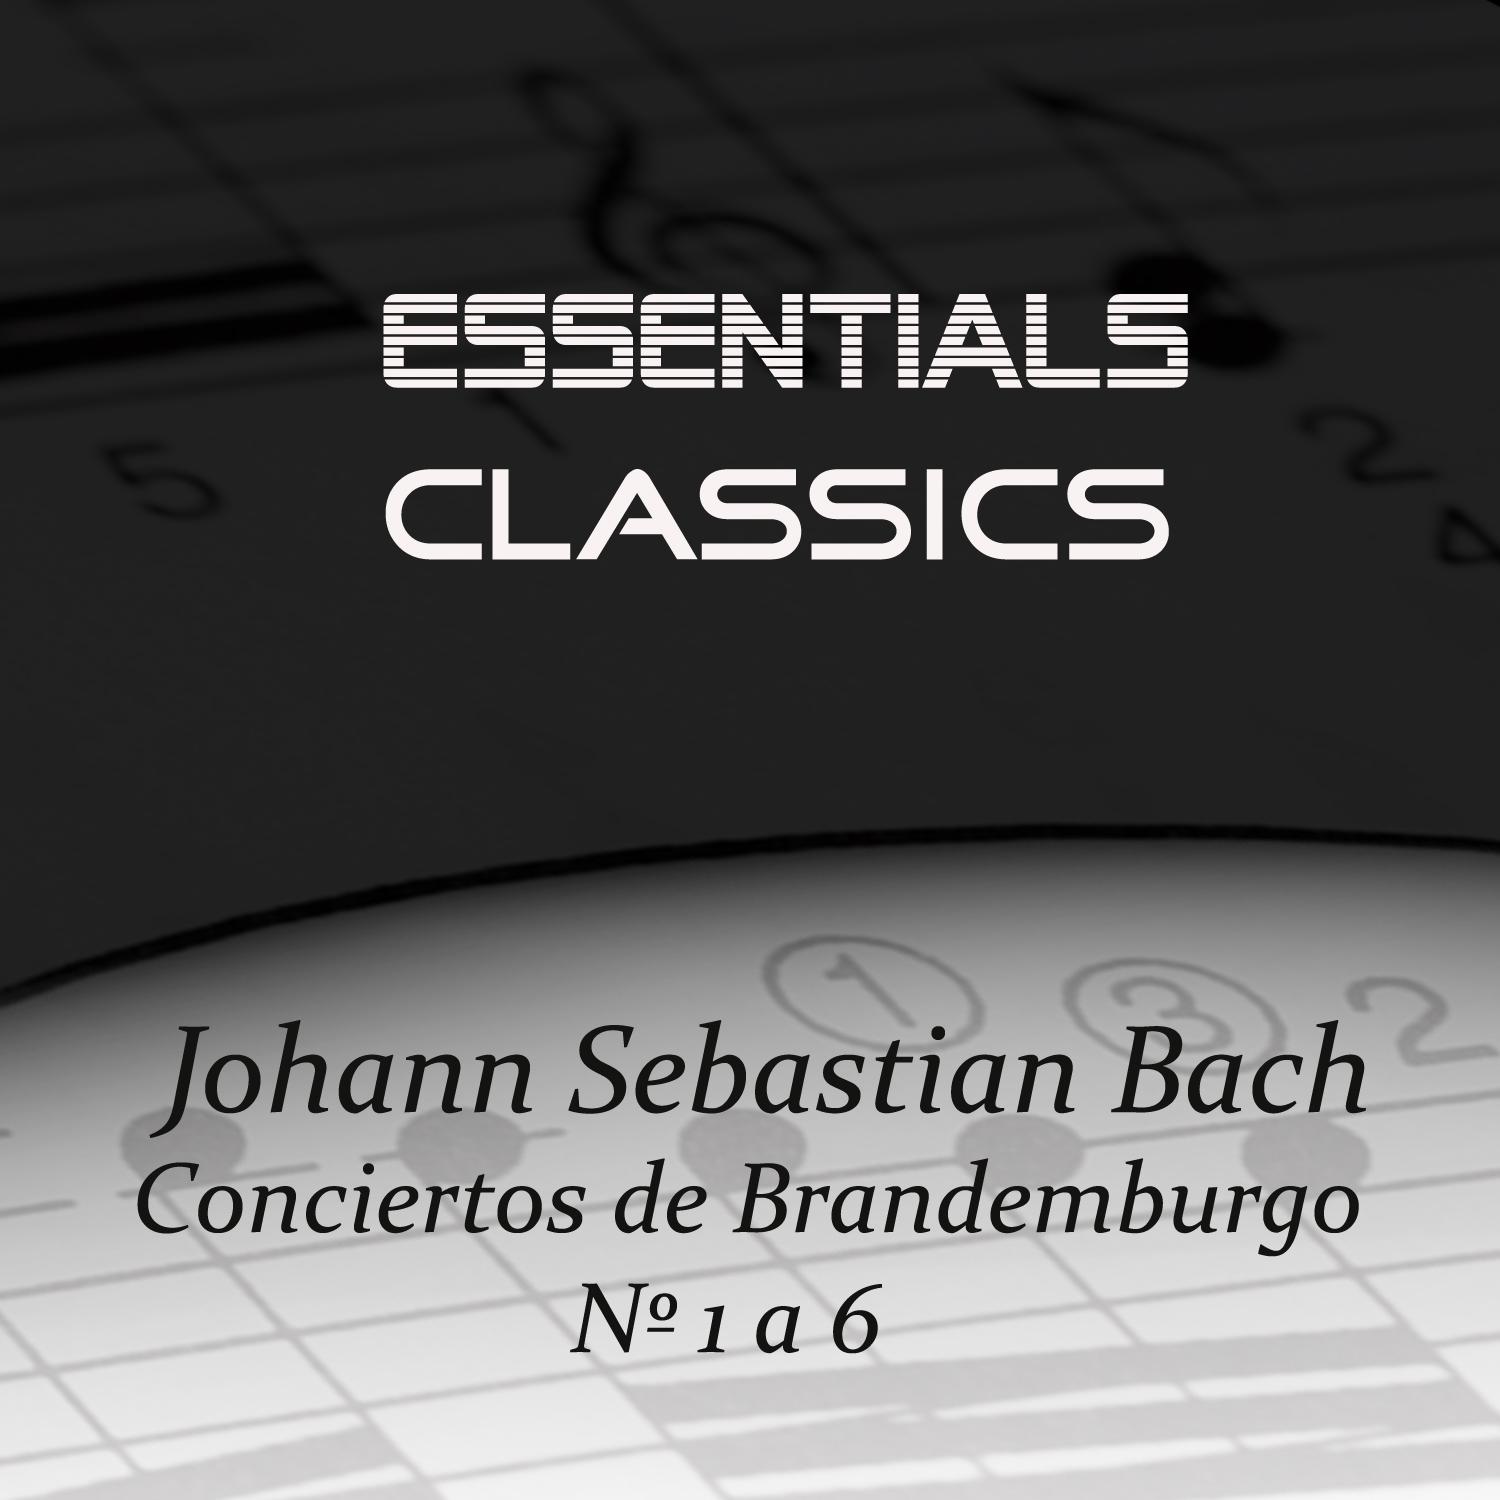 Bach: Conciertos de Brandenburgo No. 1 a 6